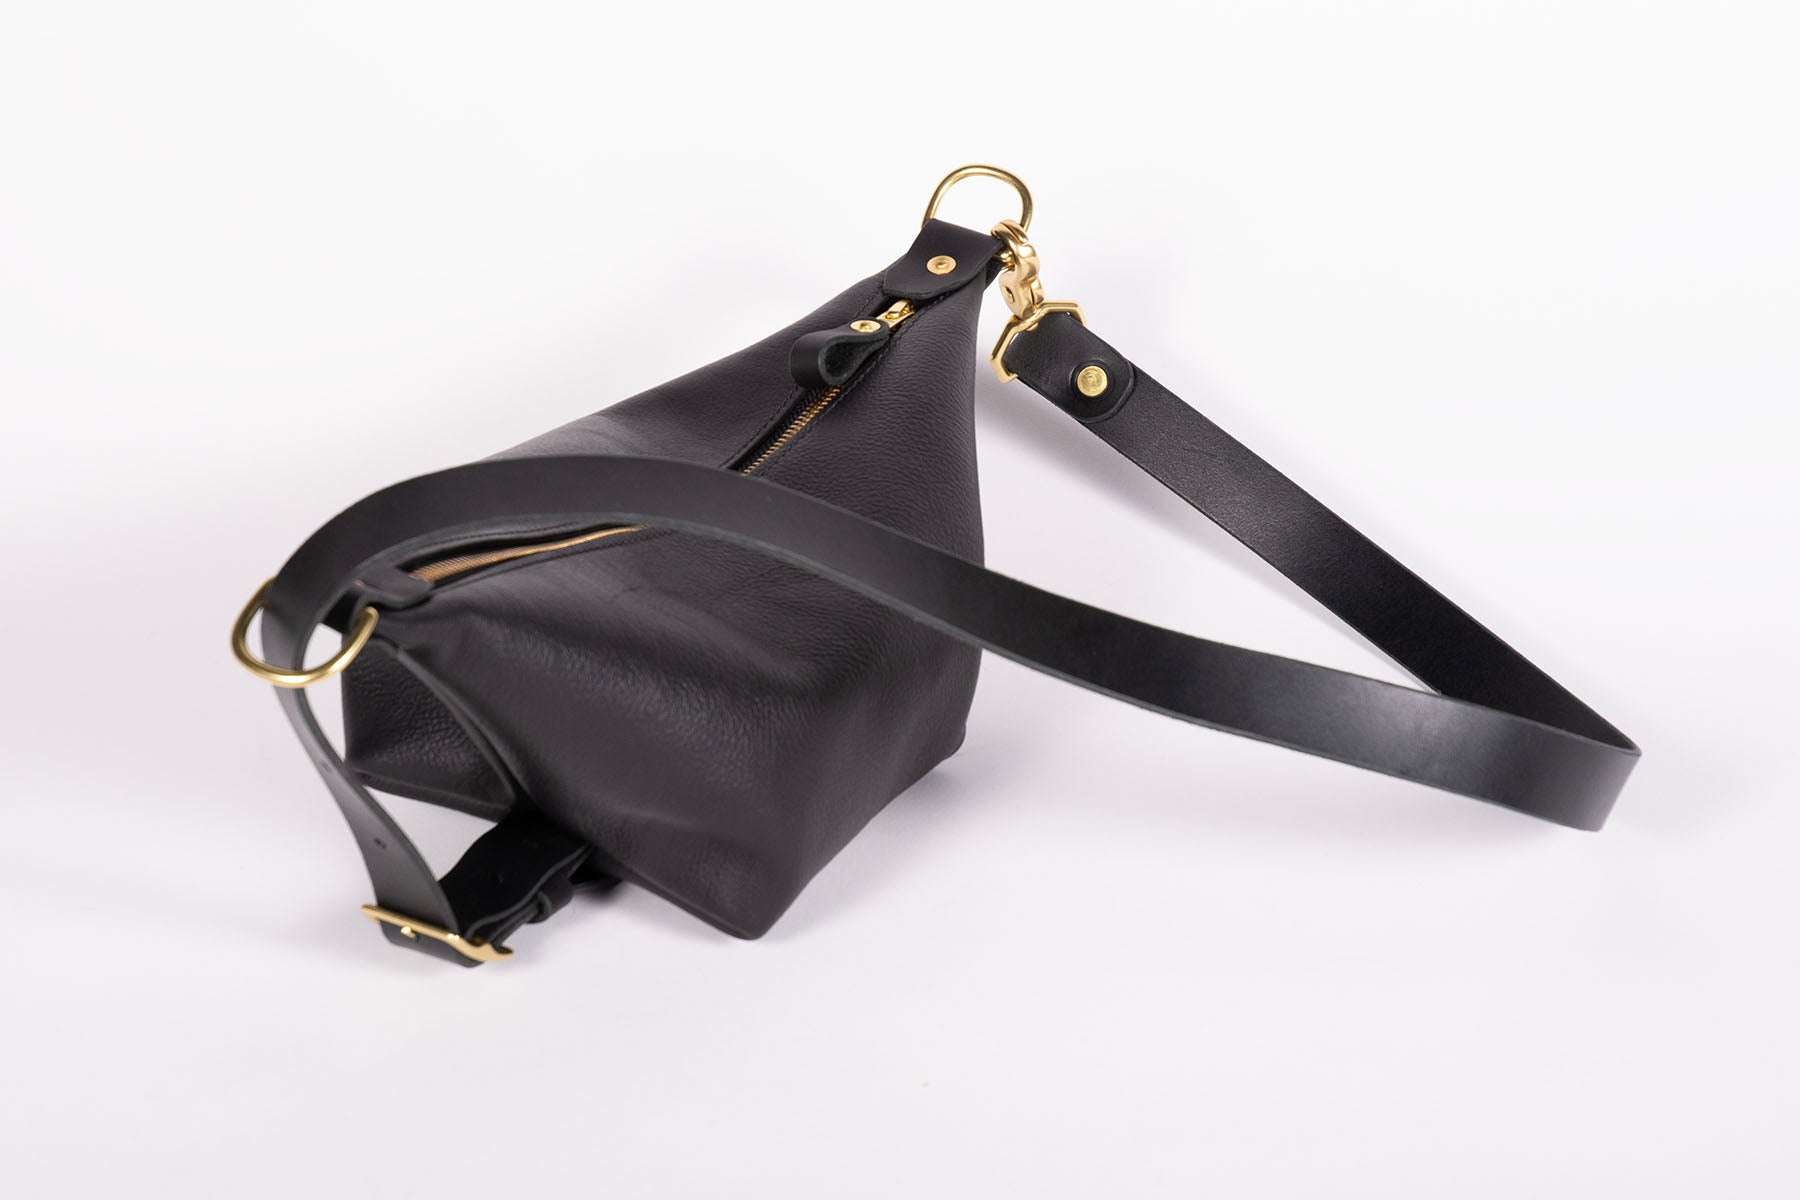 American Leather Co. Austin Shoulder Bag - QVC.com